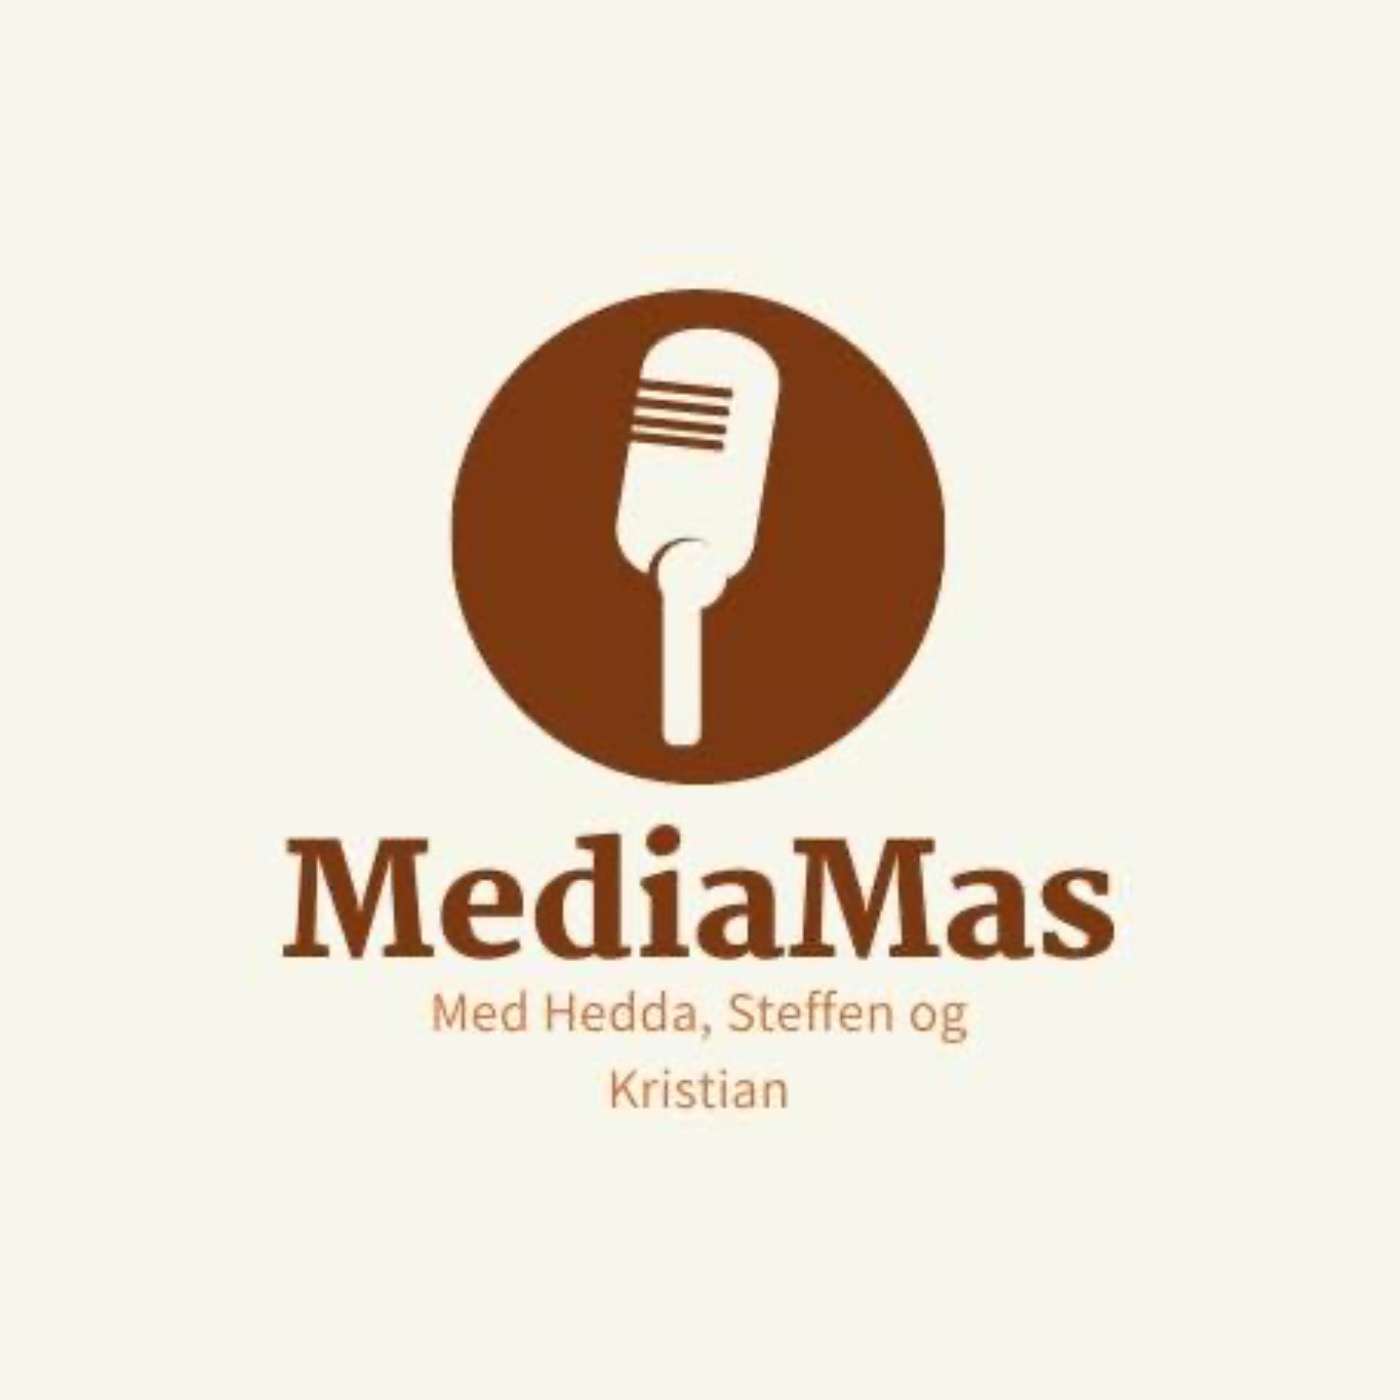 MediaMas